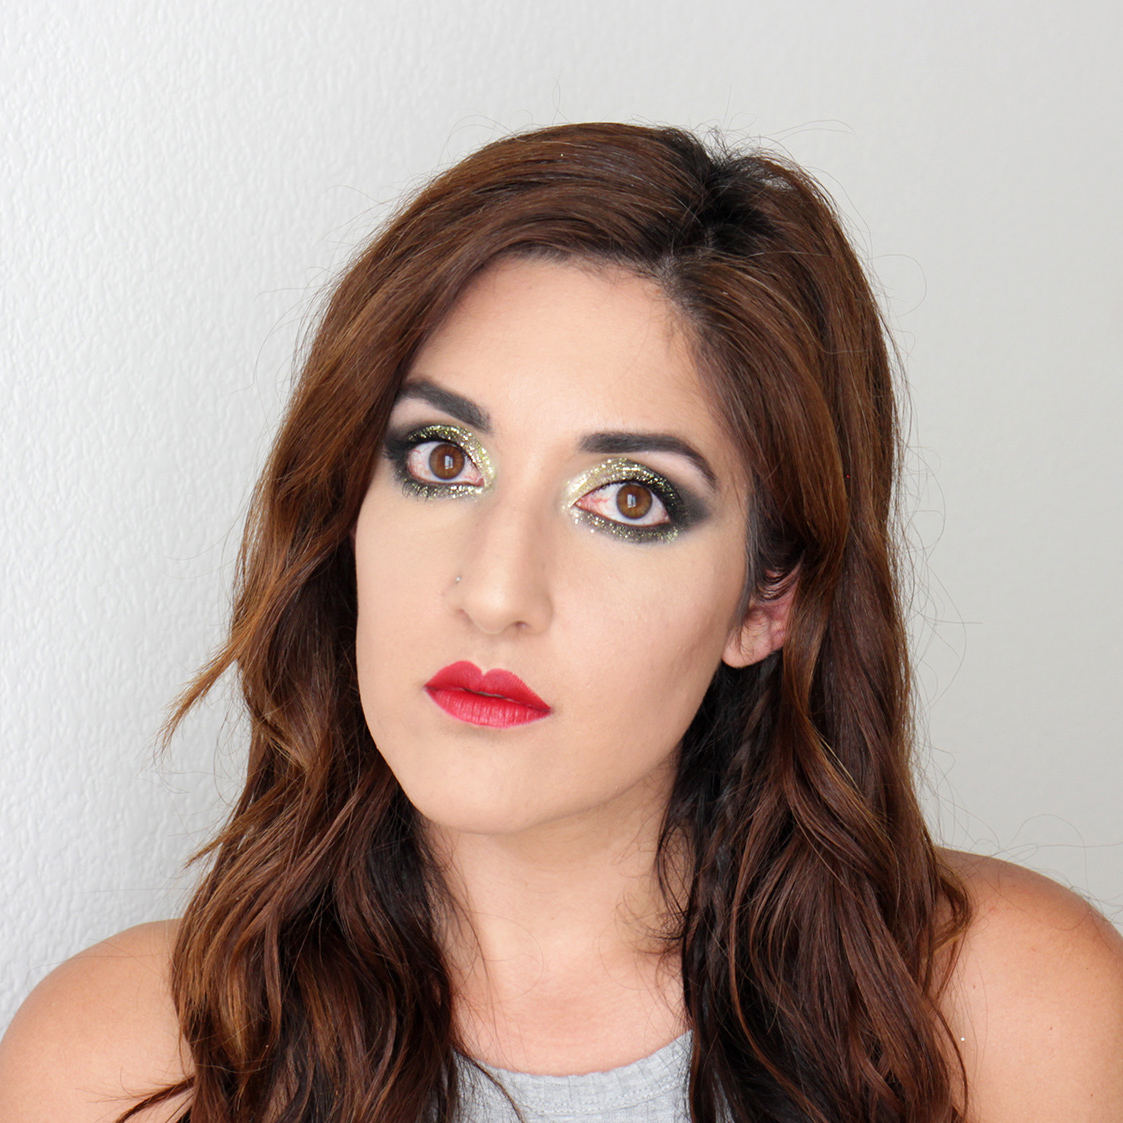 Cara Delevingne Suicide Squad Premiere Inspired Makeup 6